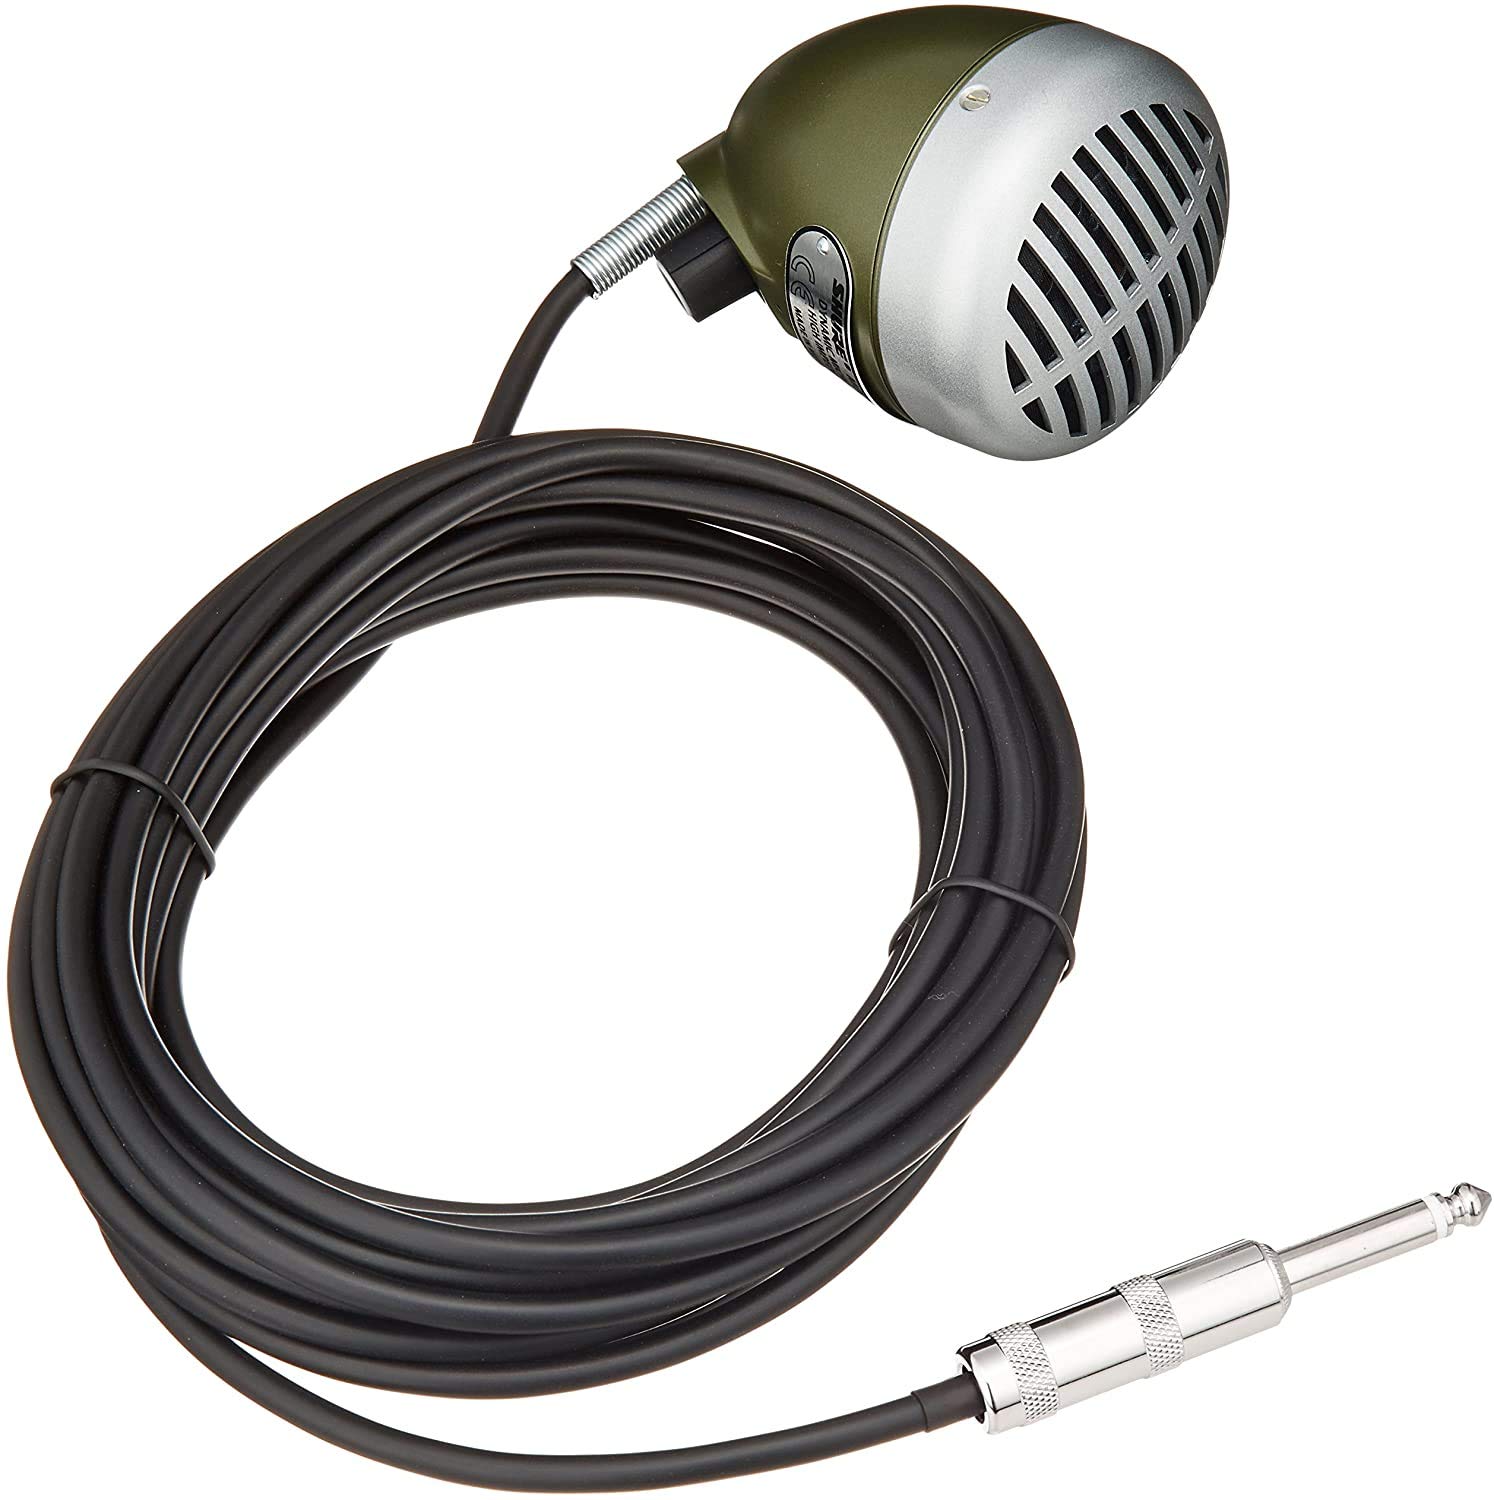 Shure 520DX Green Bullet Dynamic Harmonica Microphone